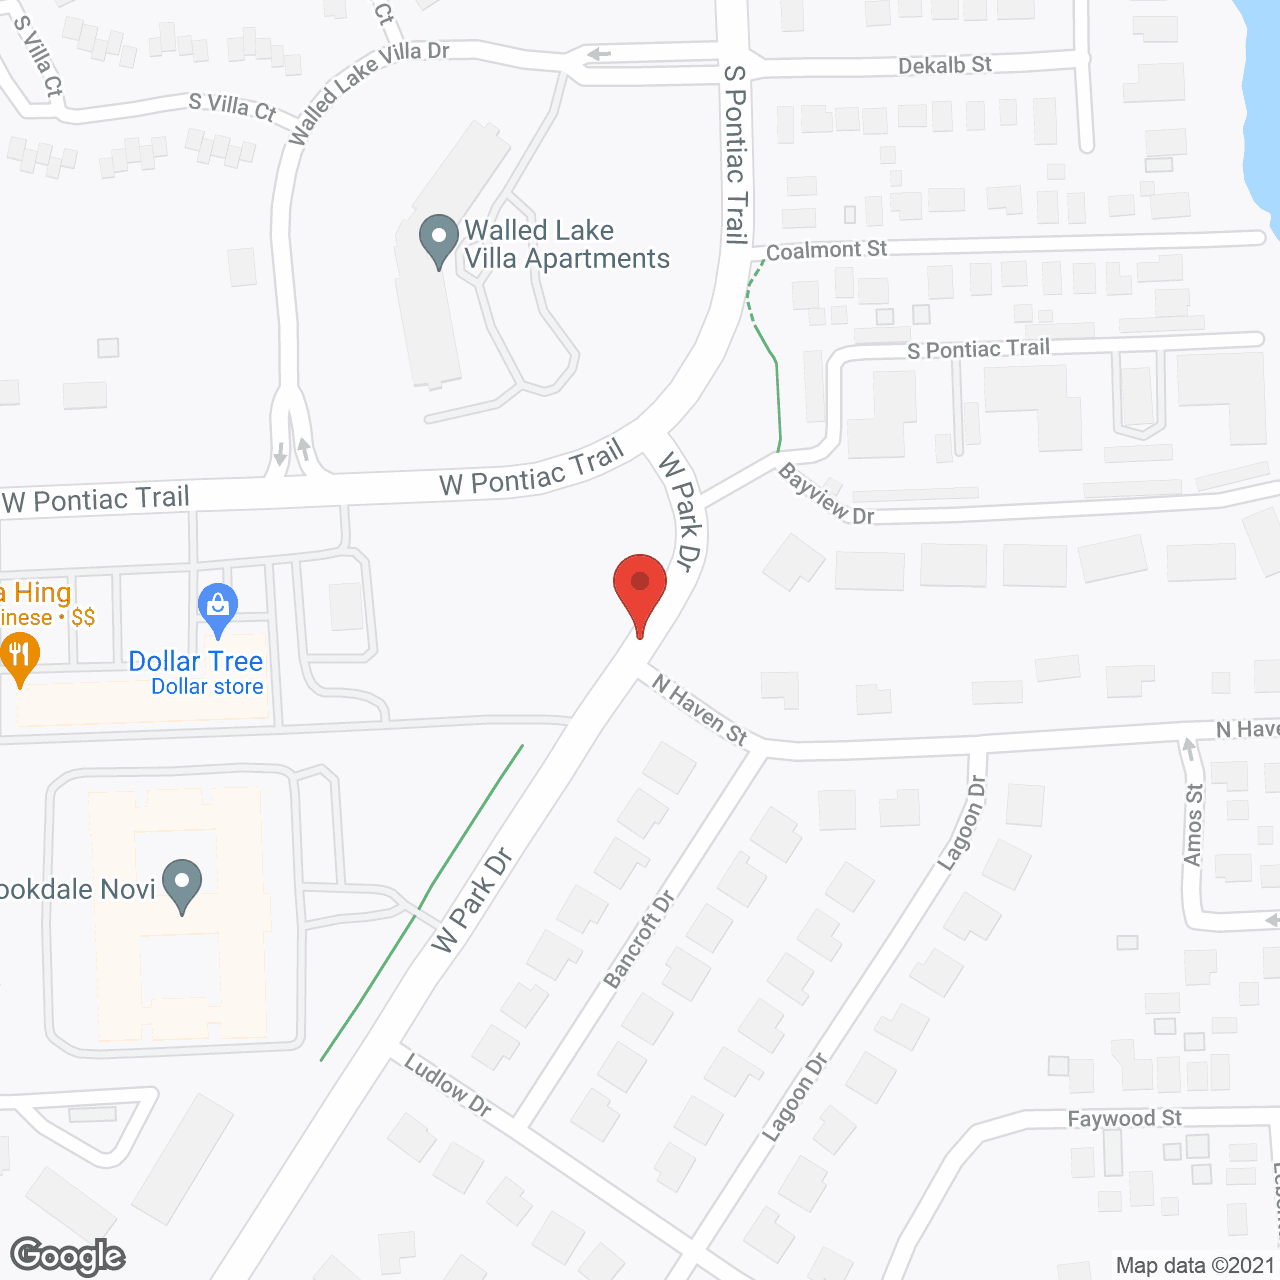 Brookdale Novi in google map